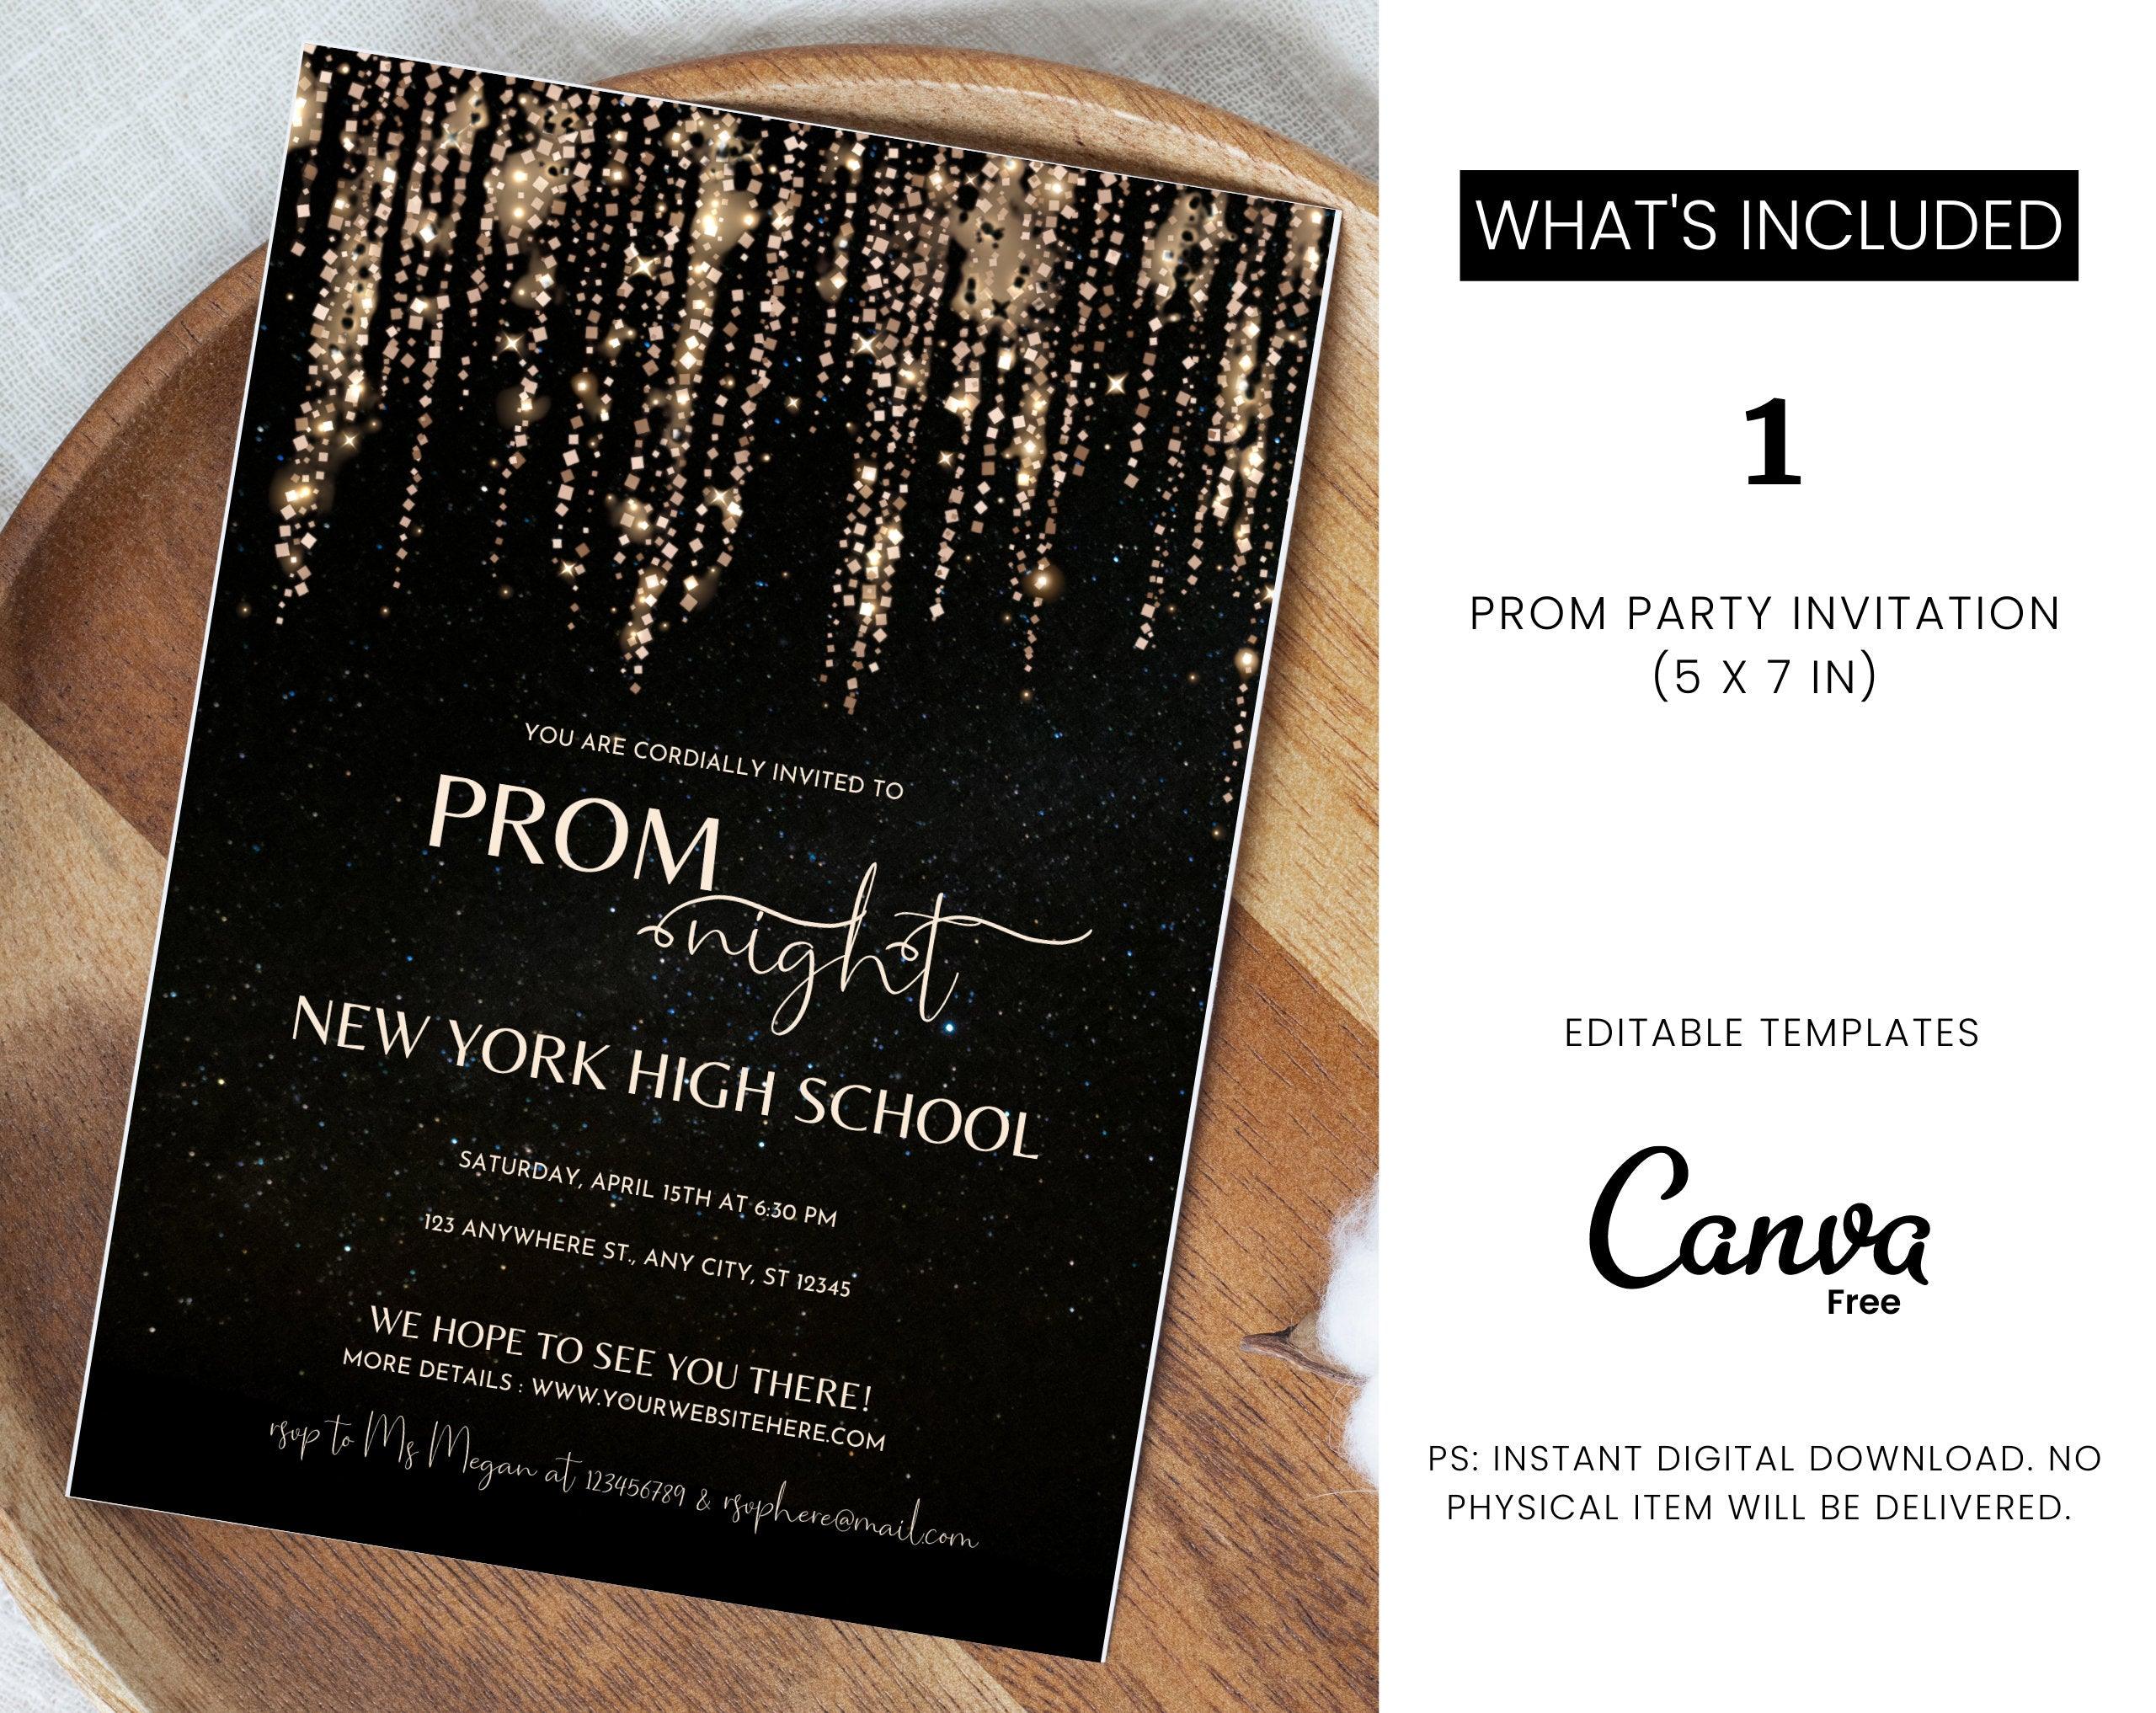 Prom-ilta, Prom Party Invitation, Prom Invitation Flyer, Prom Event Flyer digitaalinen lataus, korttimalli, digitaalisesti muokattava Canva Template - plusminusco.com